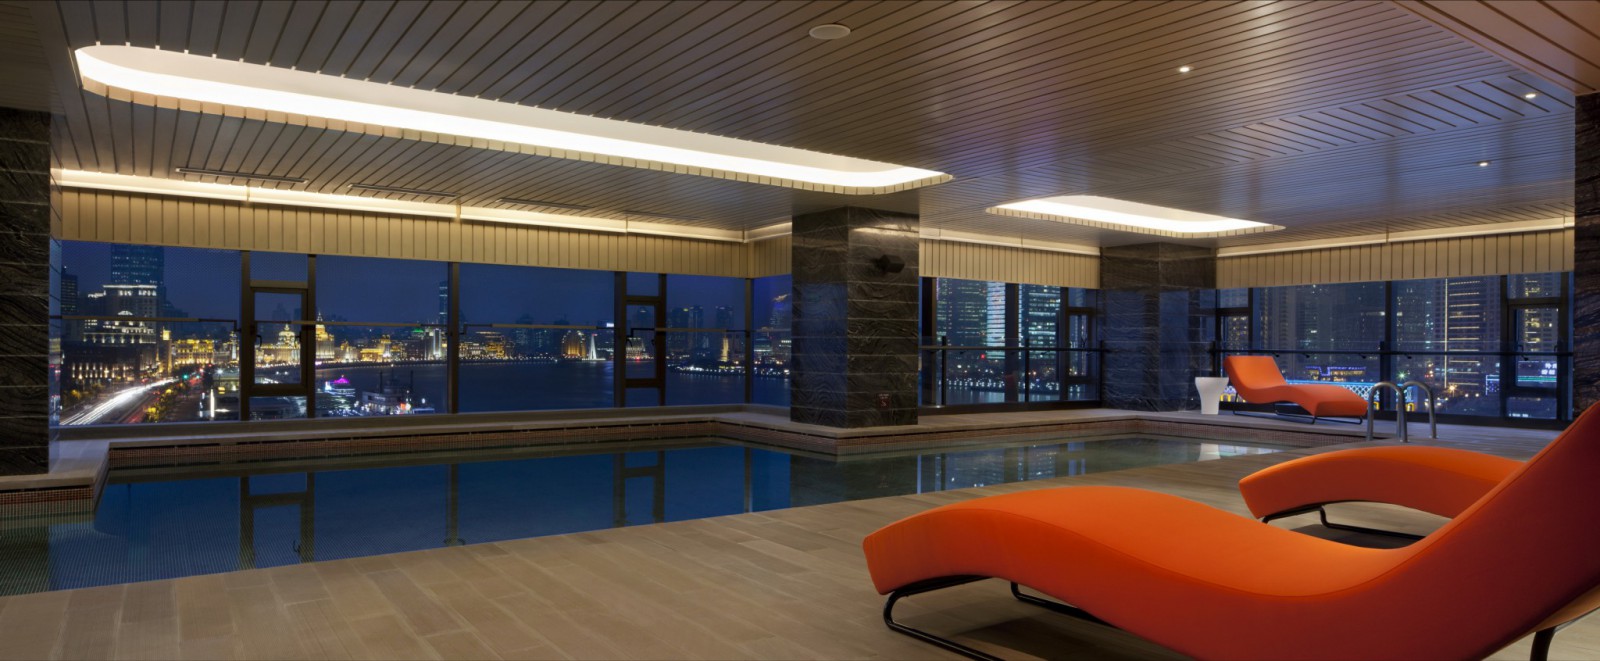 indoor swimming pool - night view